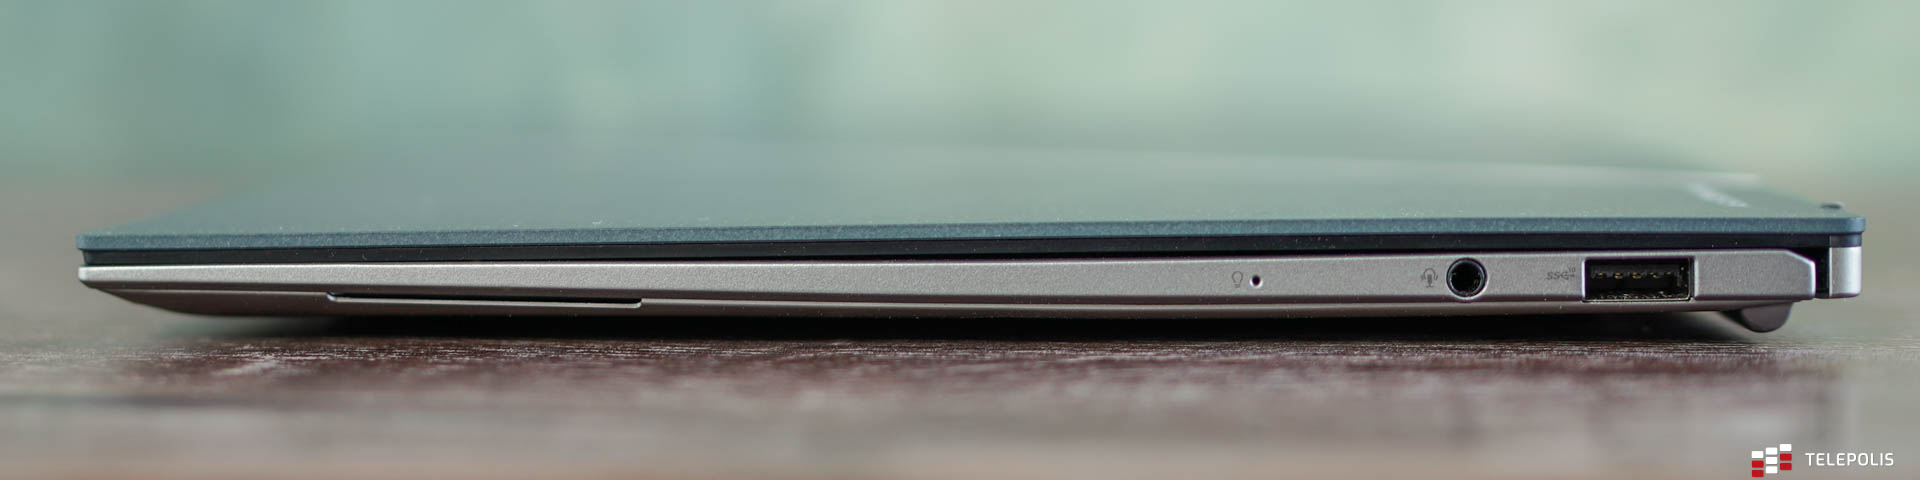 Asus Zenbook S 13 OLED prawy bok